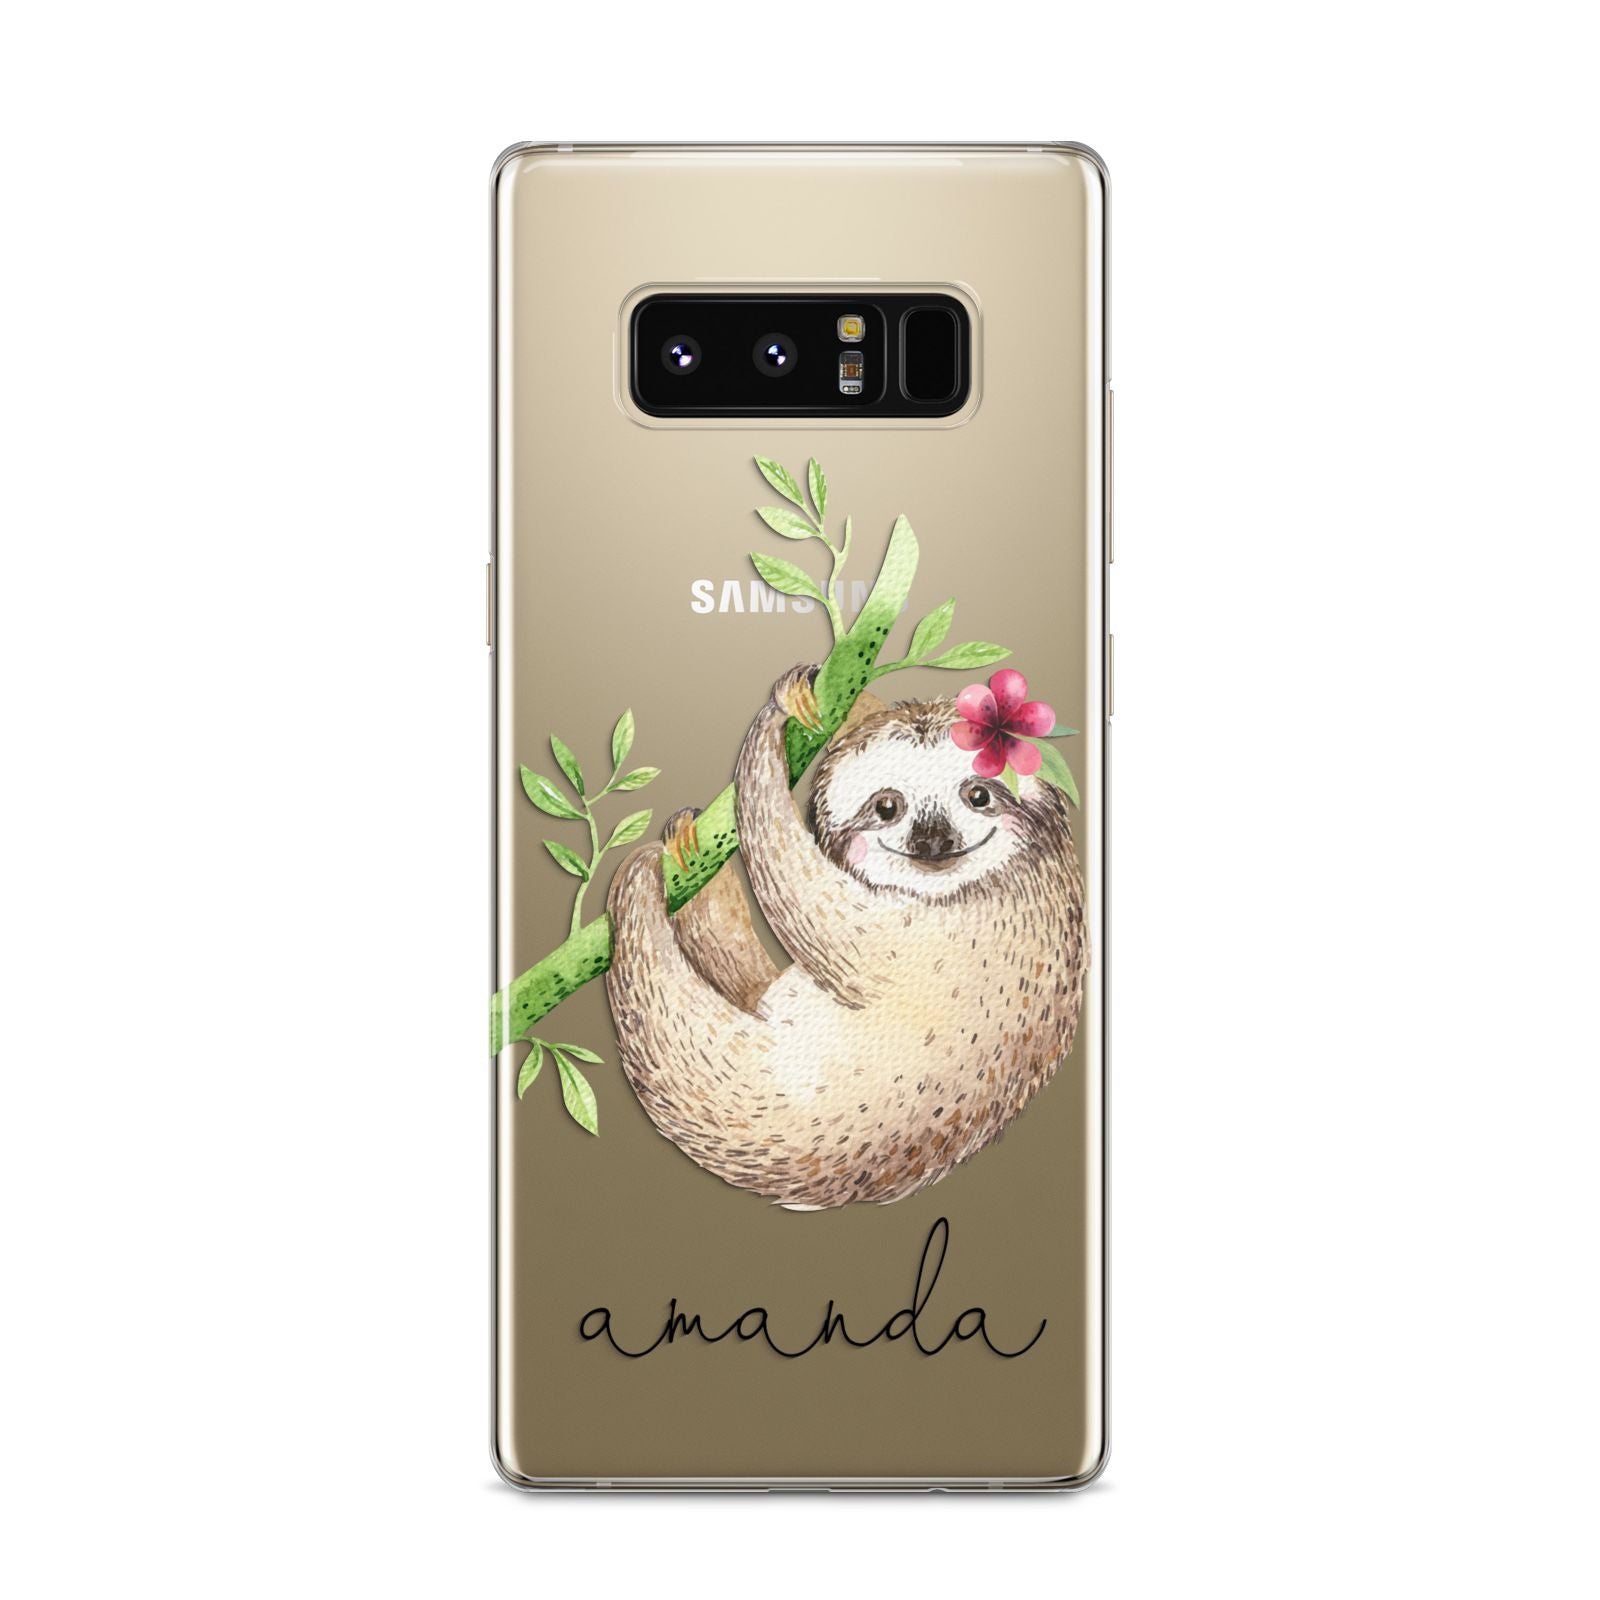 Personalised Sloth Samsung Galaxy S8 Case